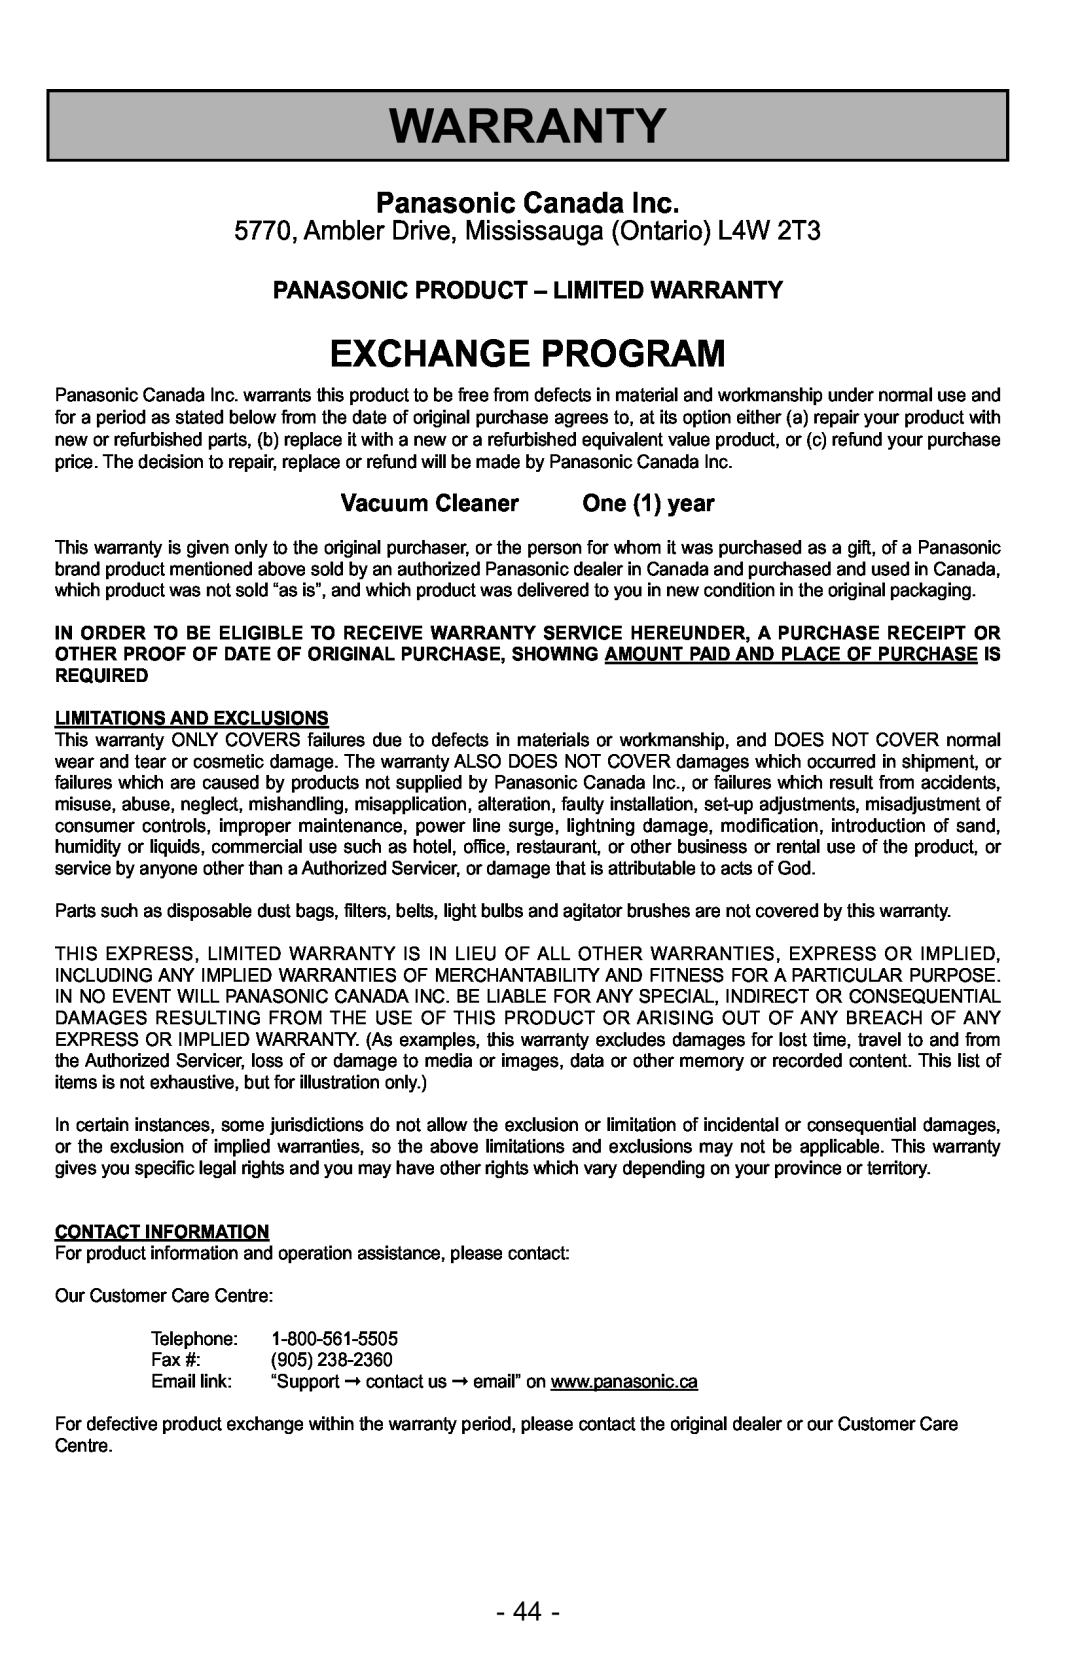 Panasonic MC-UG223 Exchange Program, Panasonic Canada Inc, 5770, Ambler Drive, Mississauga Ontario L4W 2T3, Warranty 